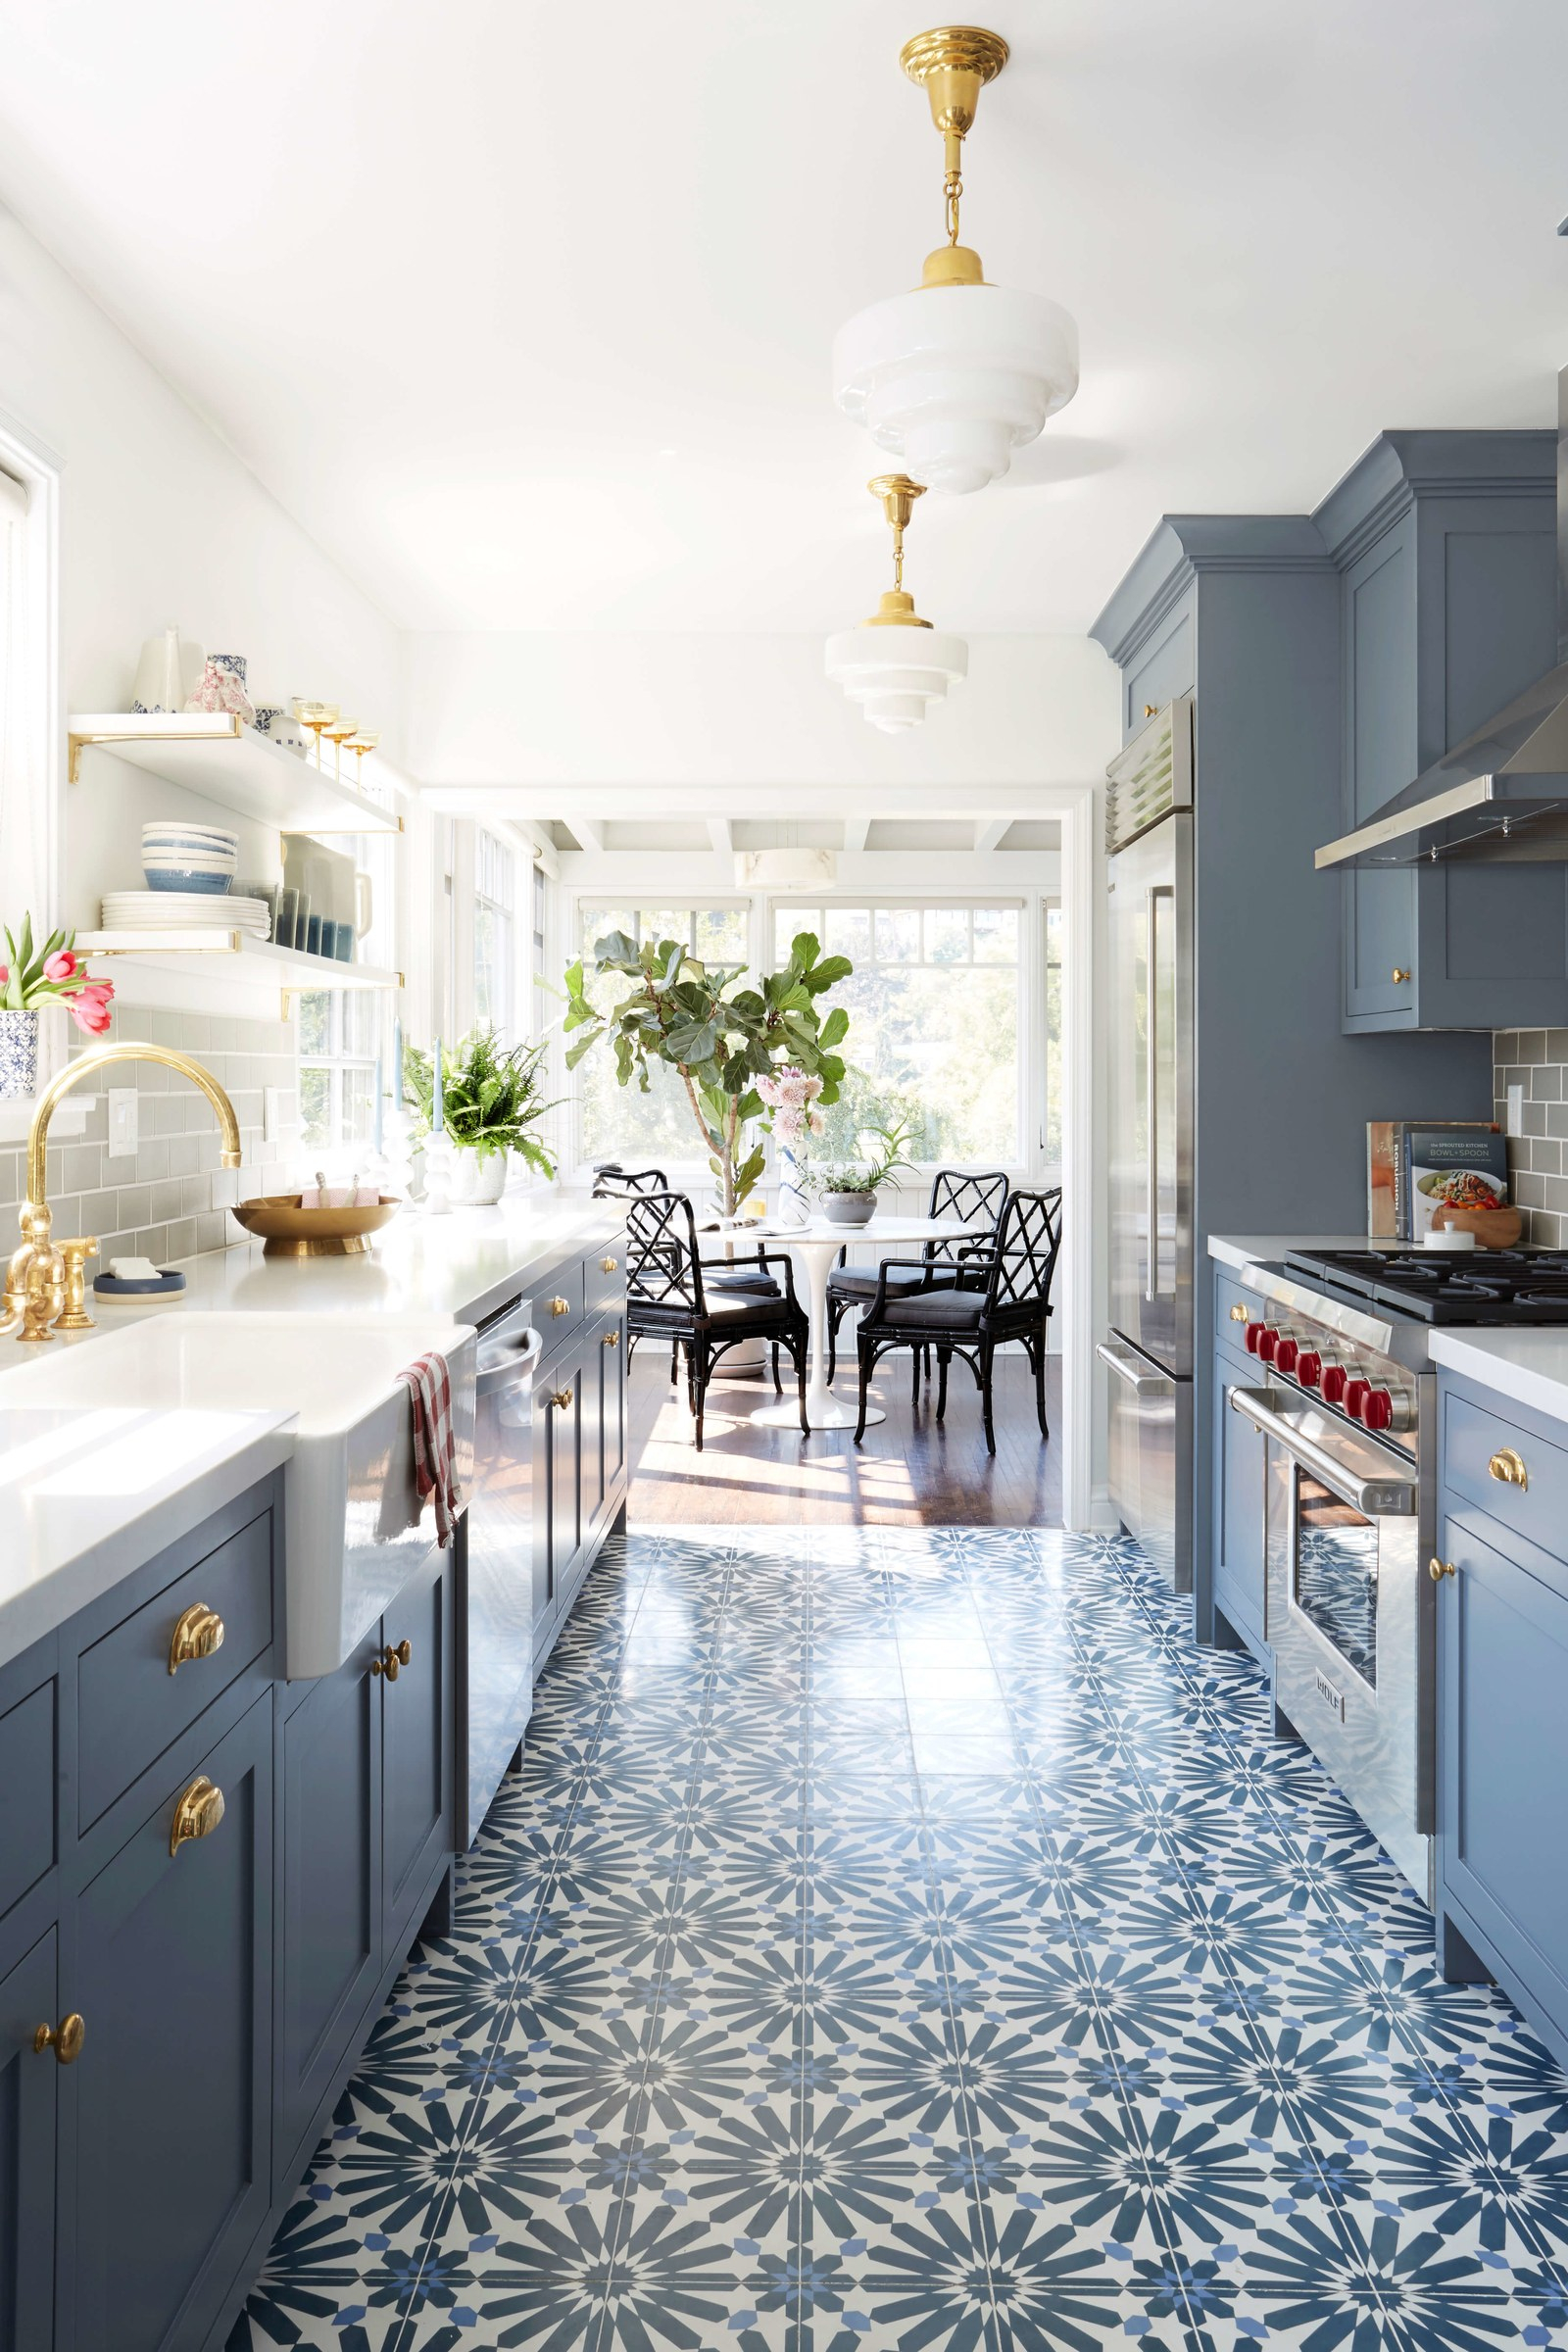 8 Kitchen Floor Tile Ideas To Brighten Your Space regarding sizing 1600 X 2400